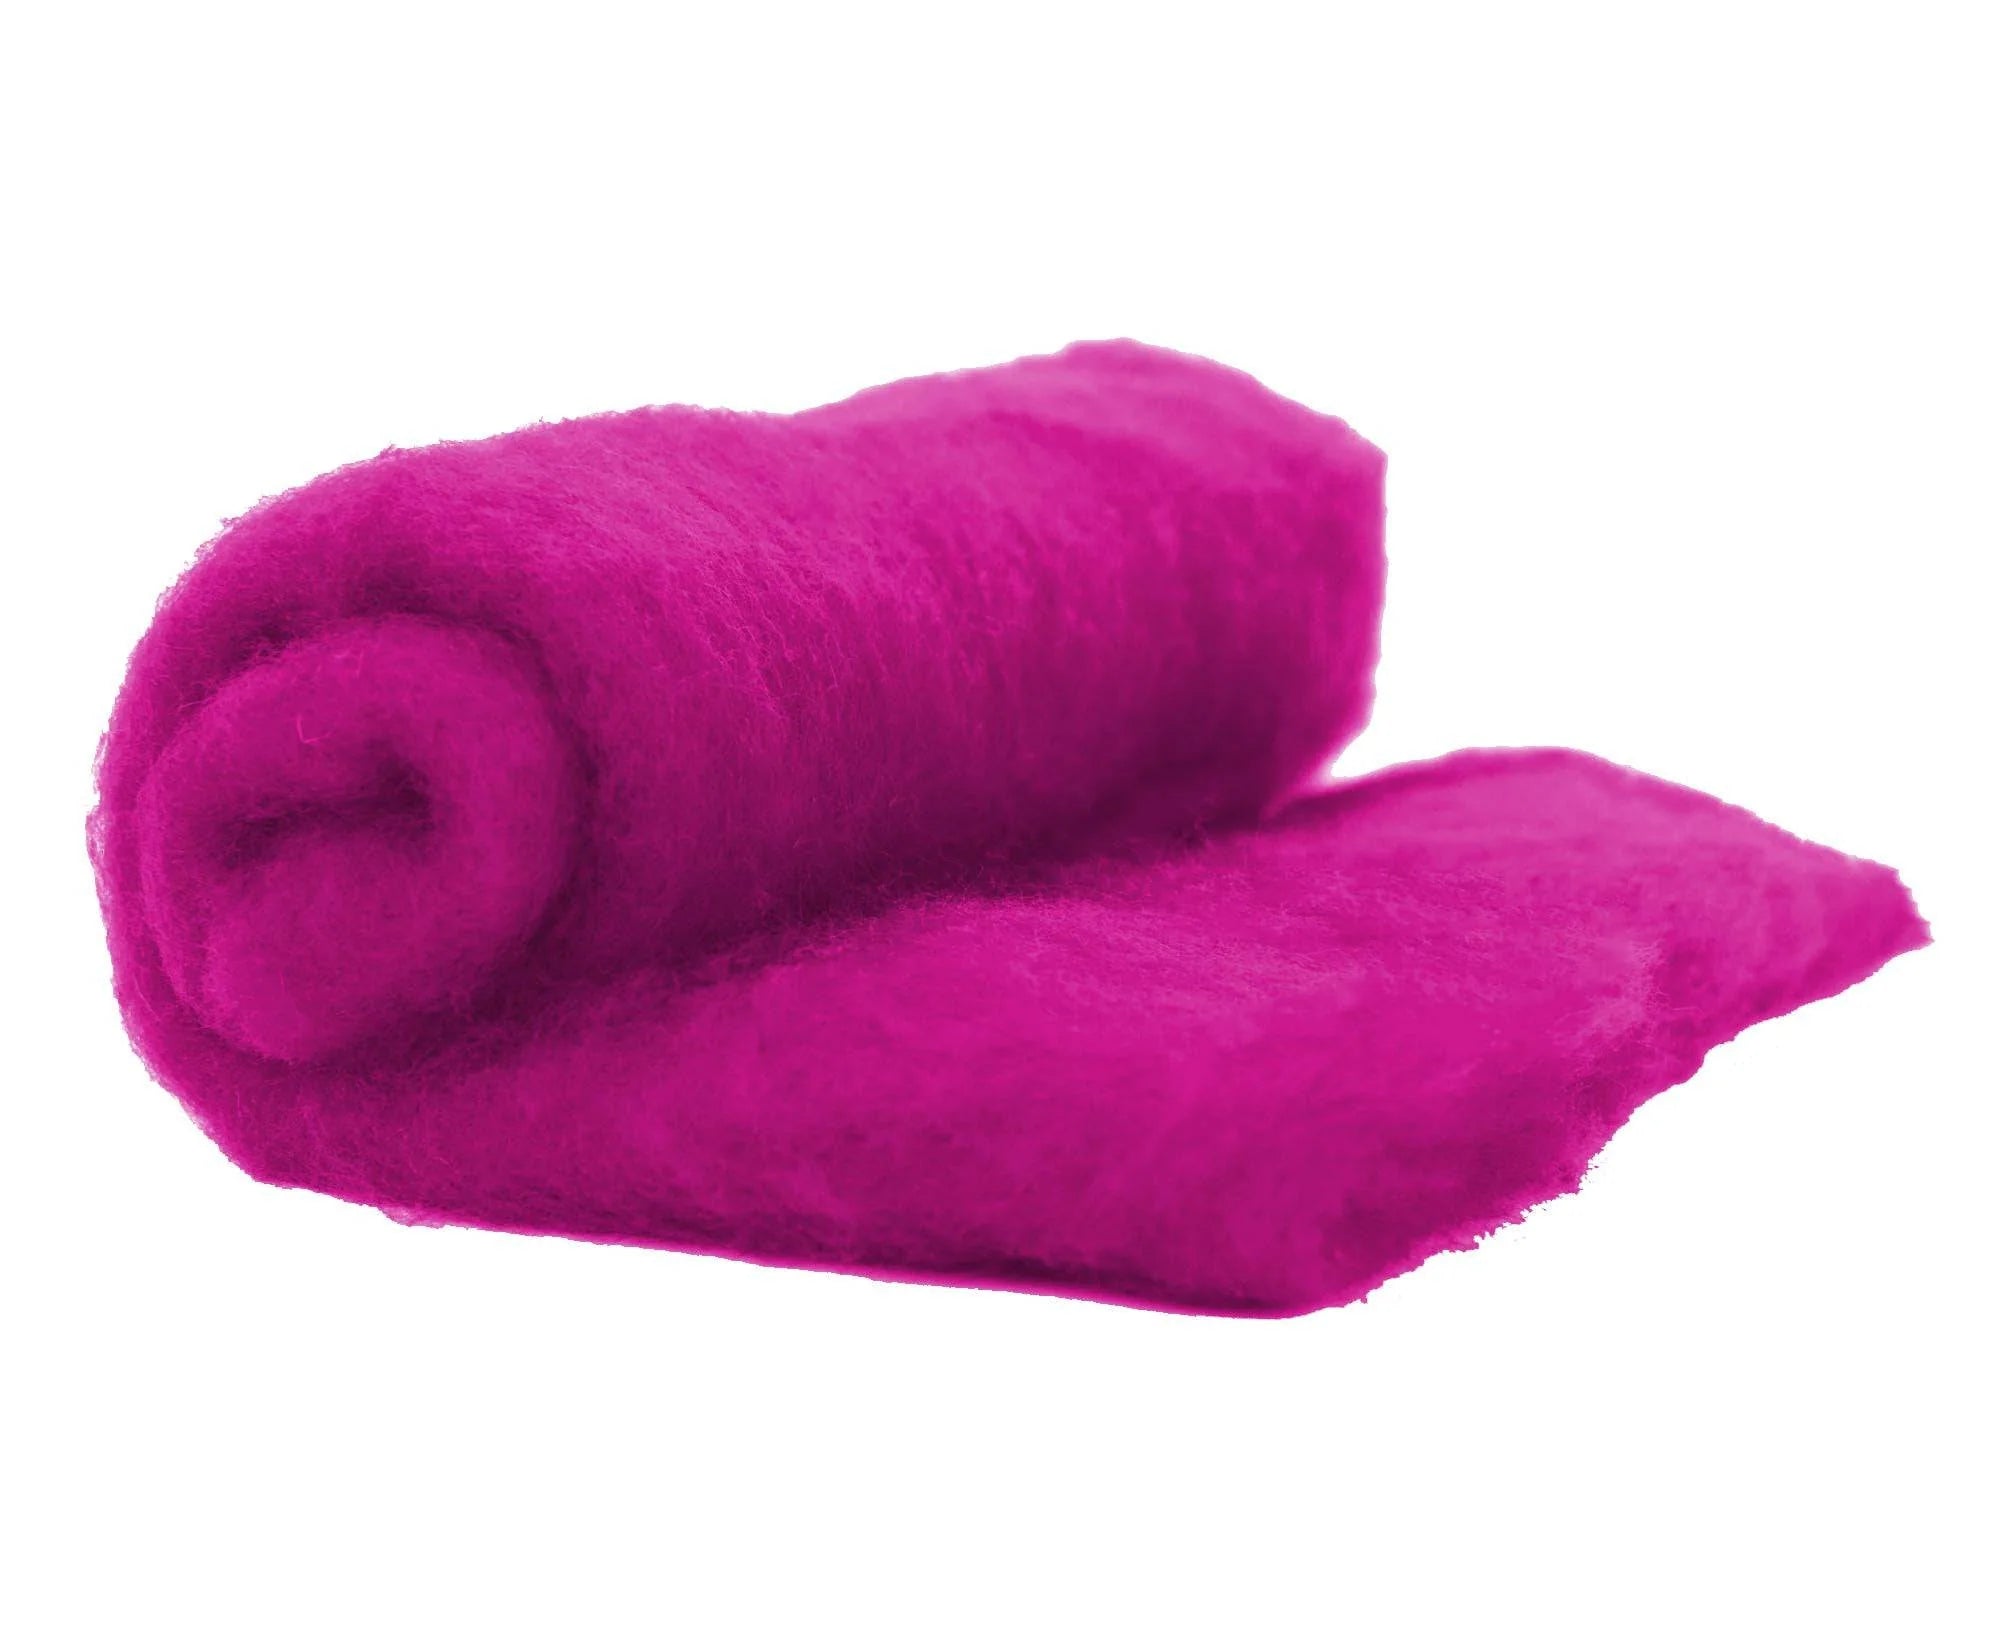 Perendale Carded Extra large Felting Wool Batt 200g Raspberry